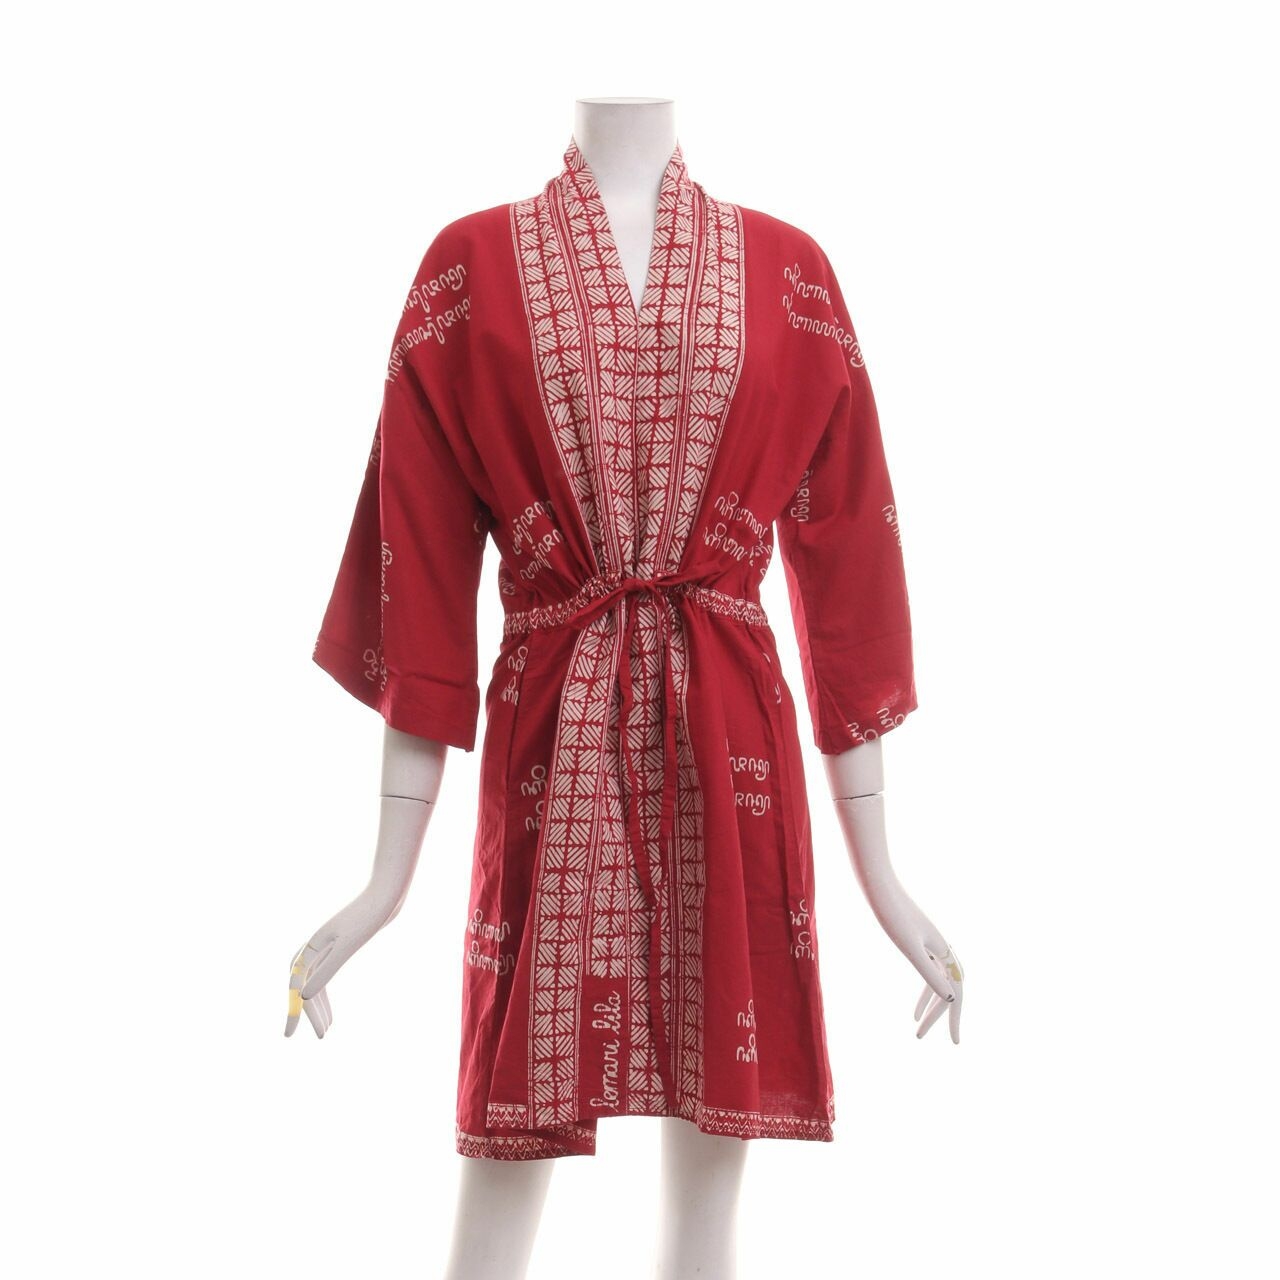 Lemari Lila Red Midi Dress